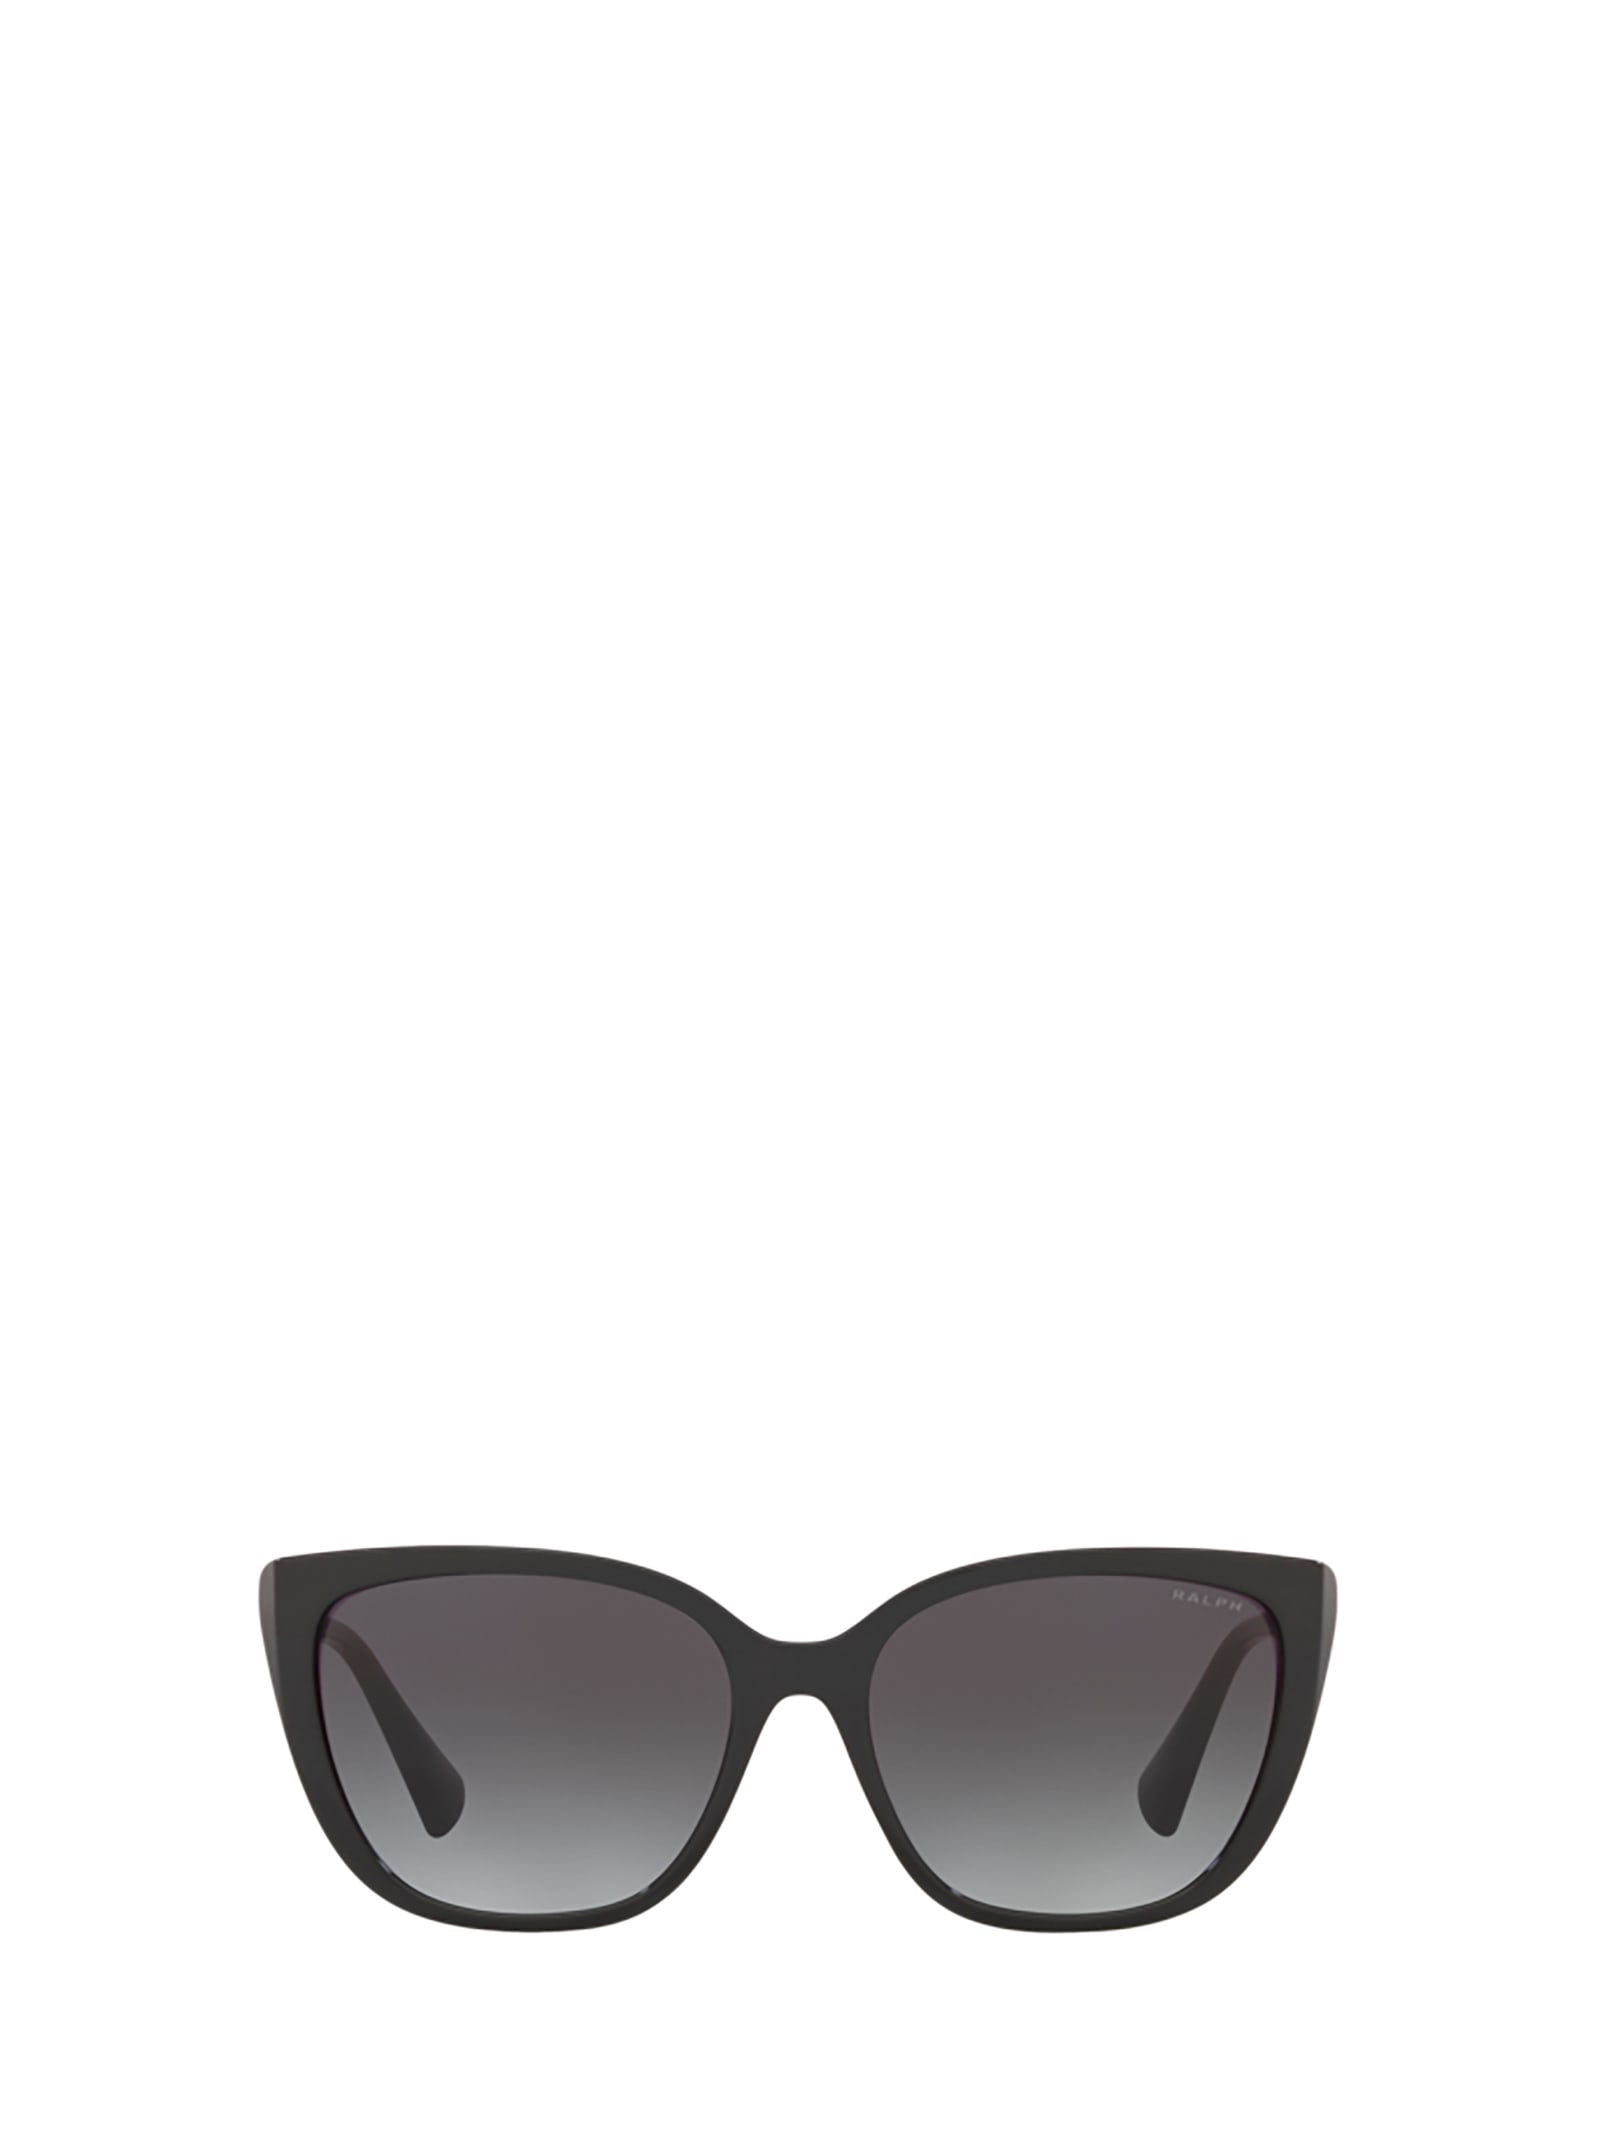 Polo Ralph Lauren Ra5274 Shiny Black Sunglasses